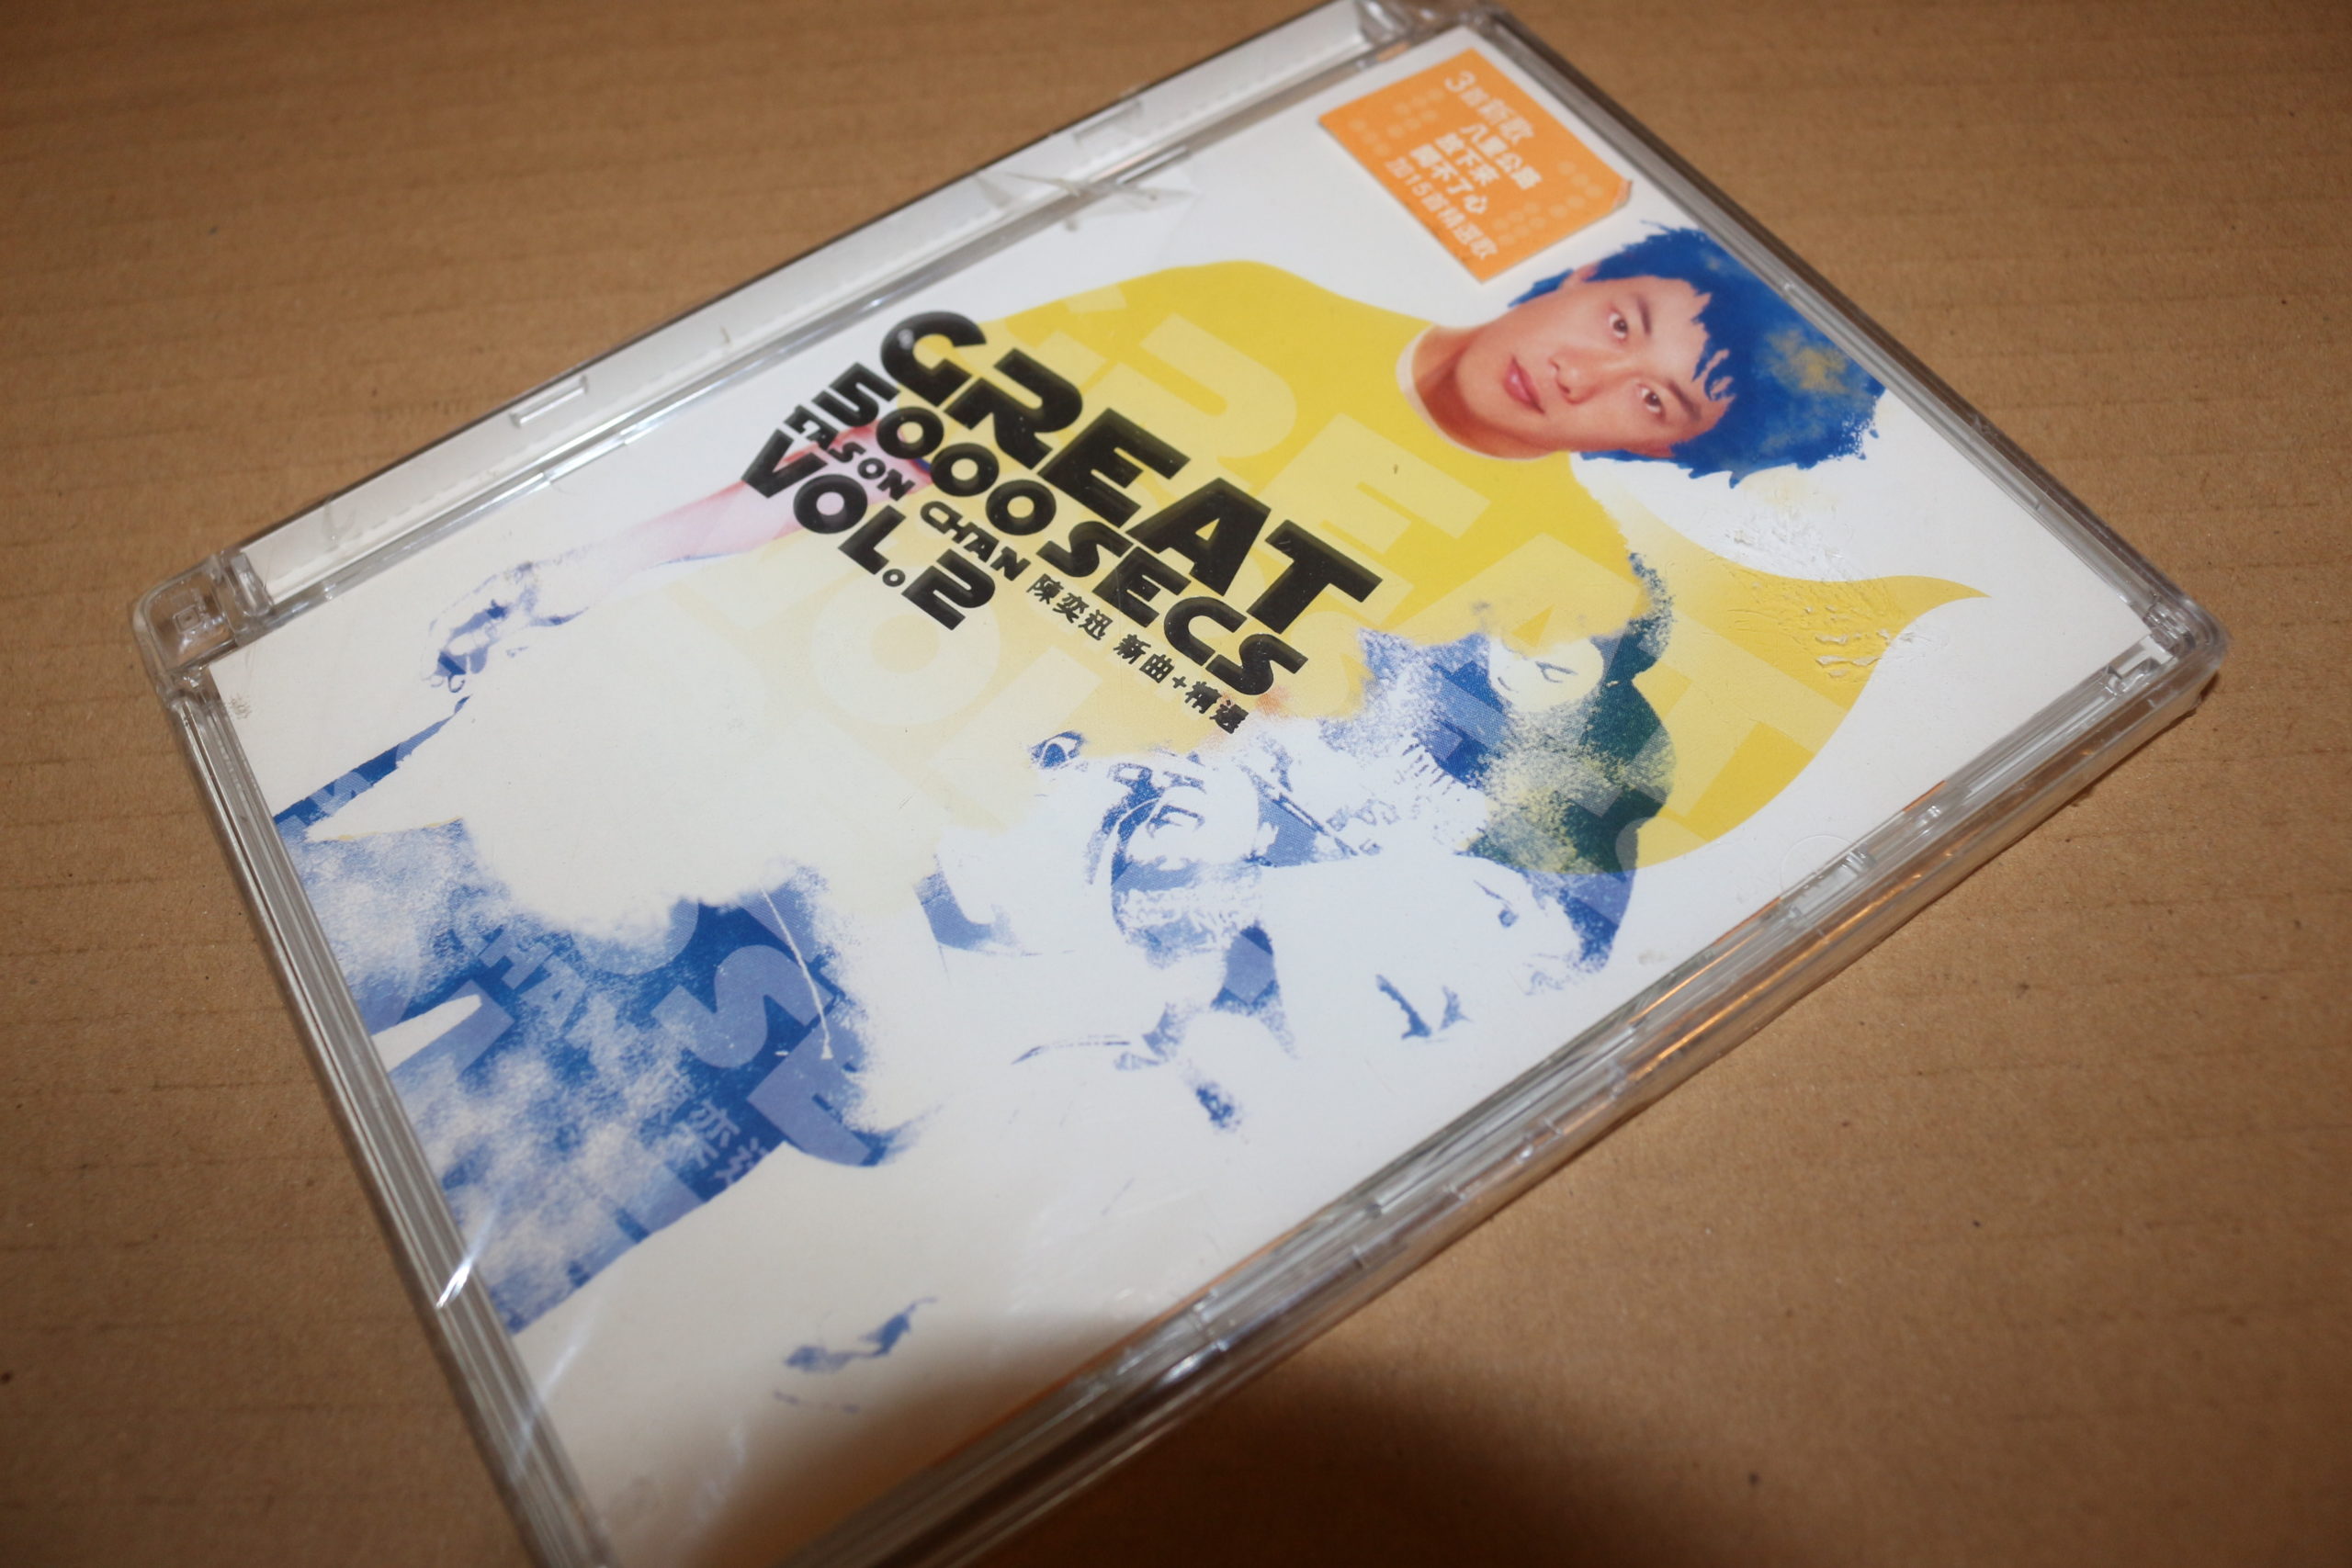 陳奕迅 great 5000 secs vol 2